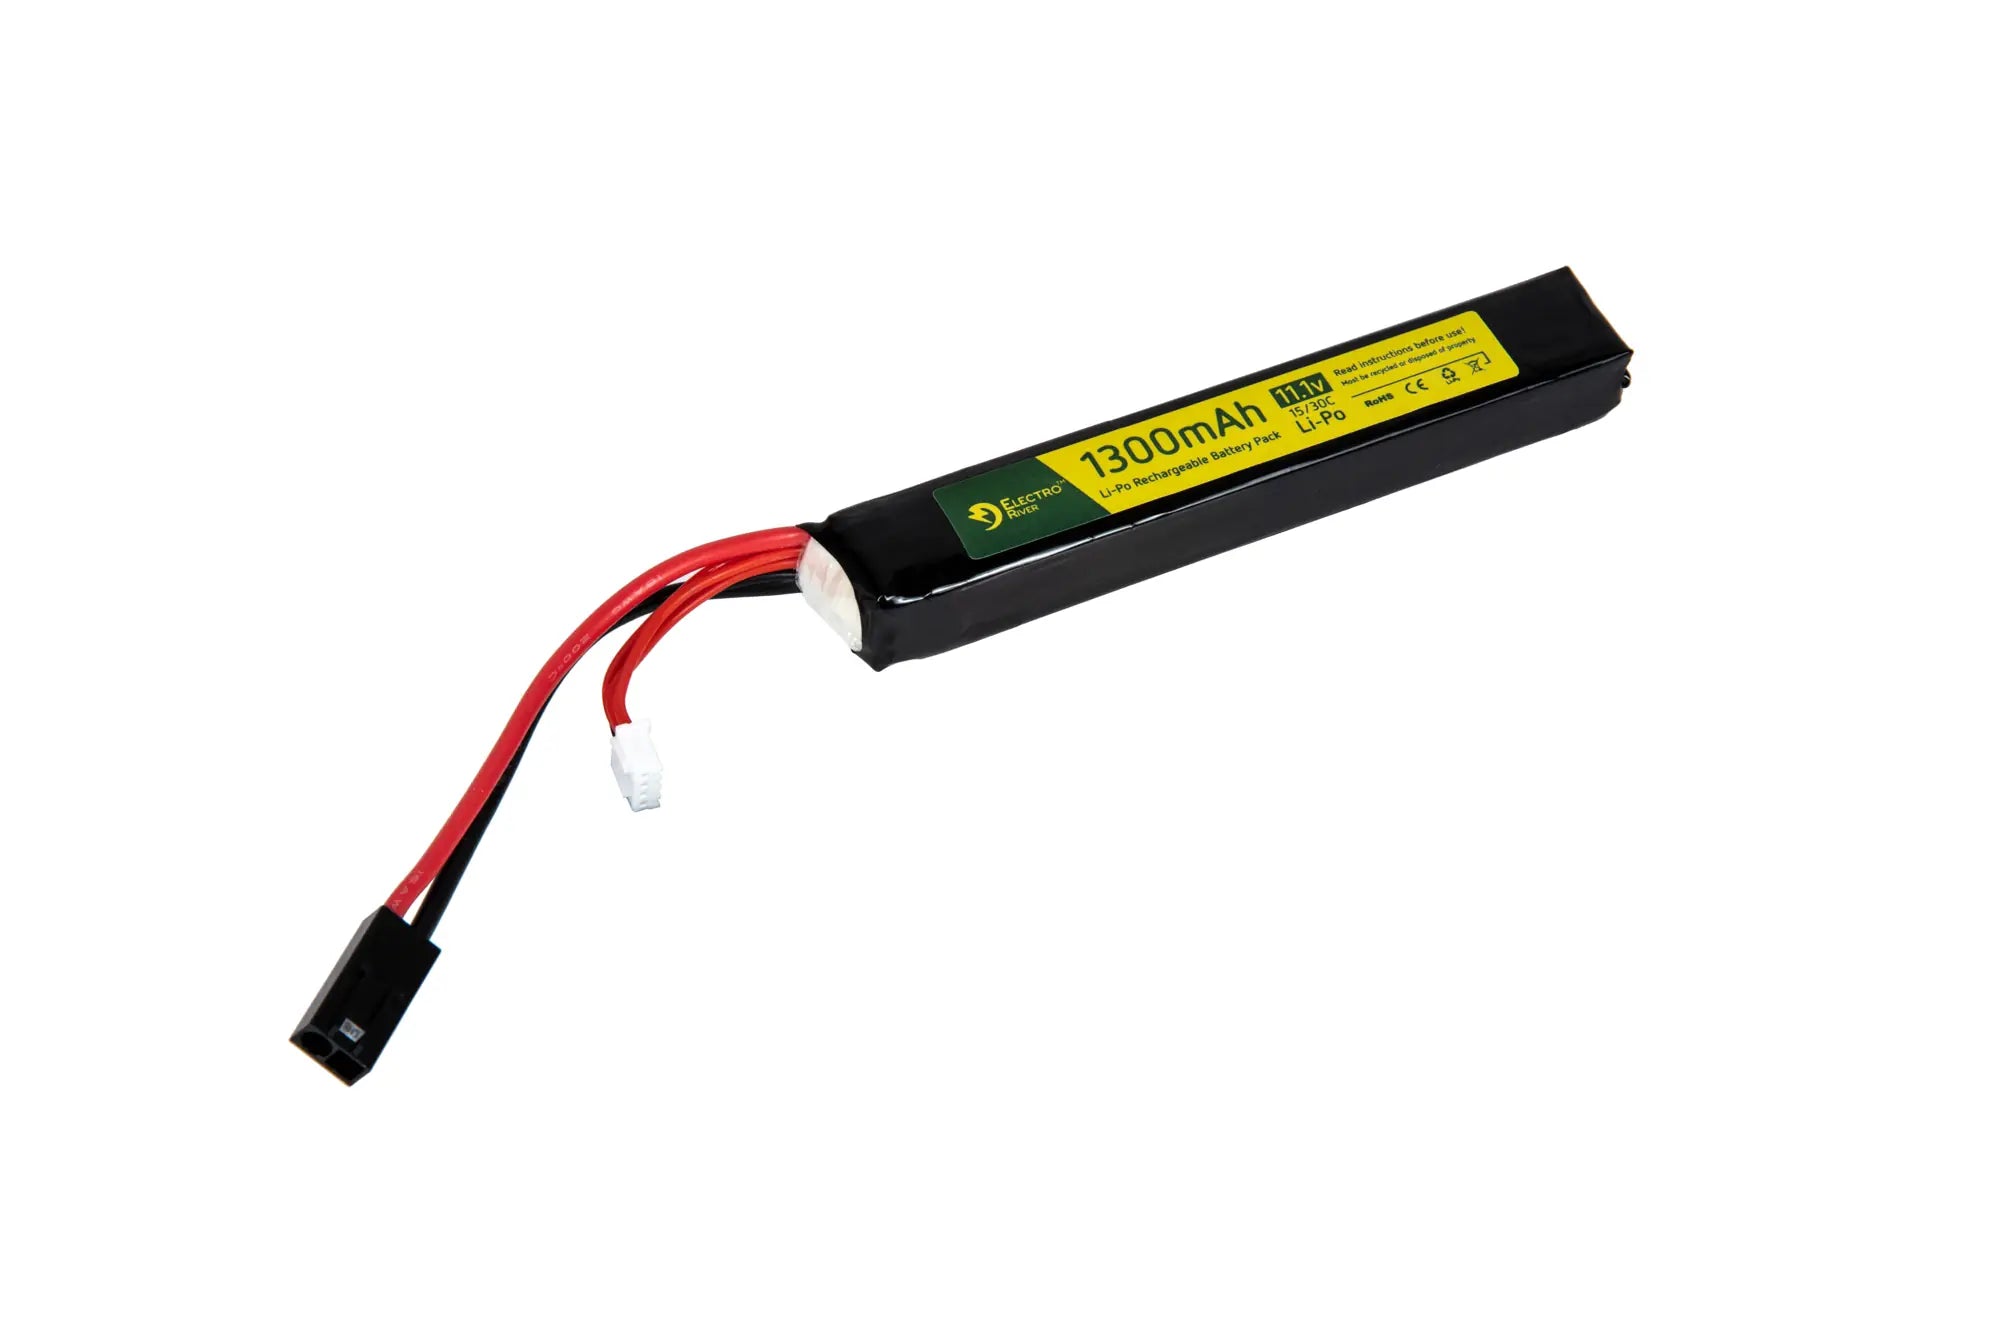 SPECNA ARMS - Batterie LiPo 7,4v 1300mAh 15/30C, 1 Stick, Dean - Safe Zone  Airsoft